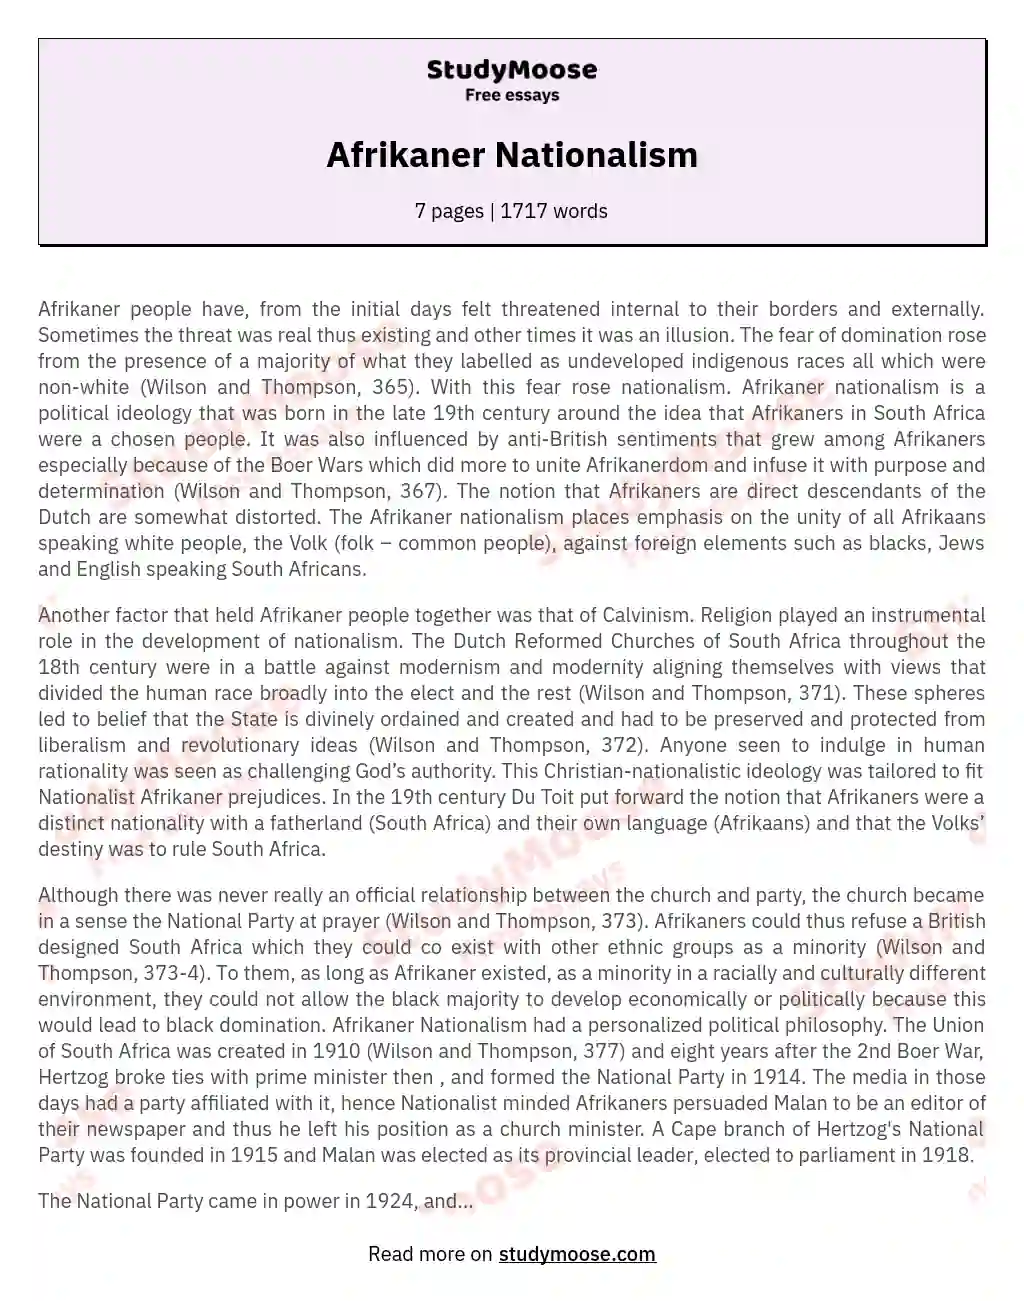 Afrikaner Nationalism essay